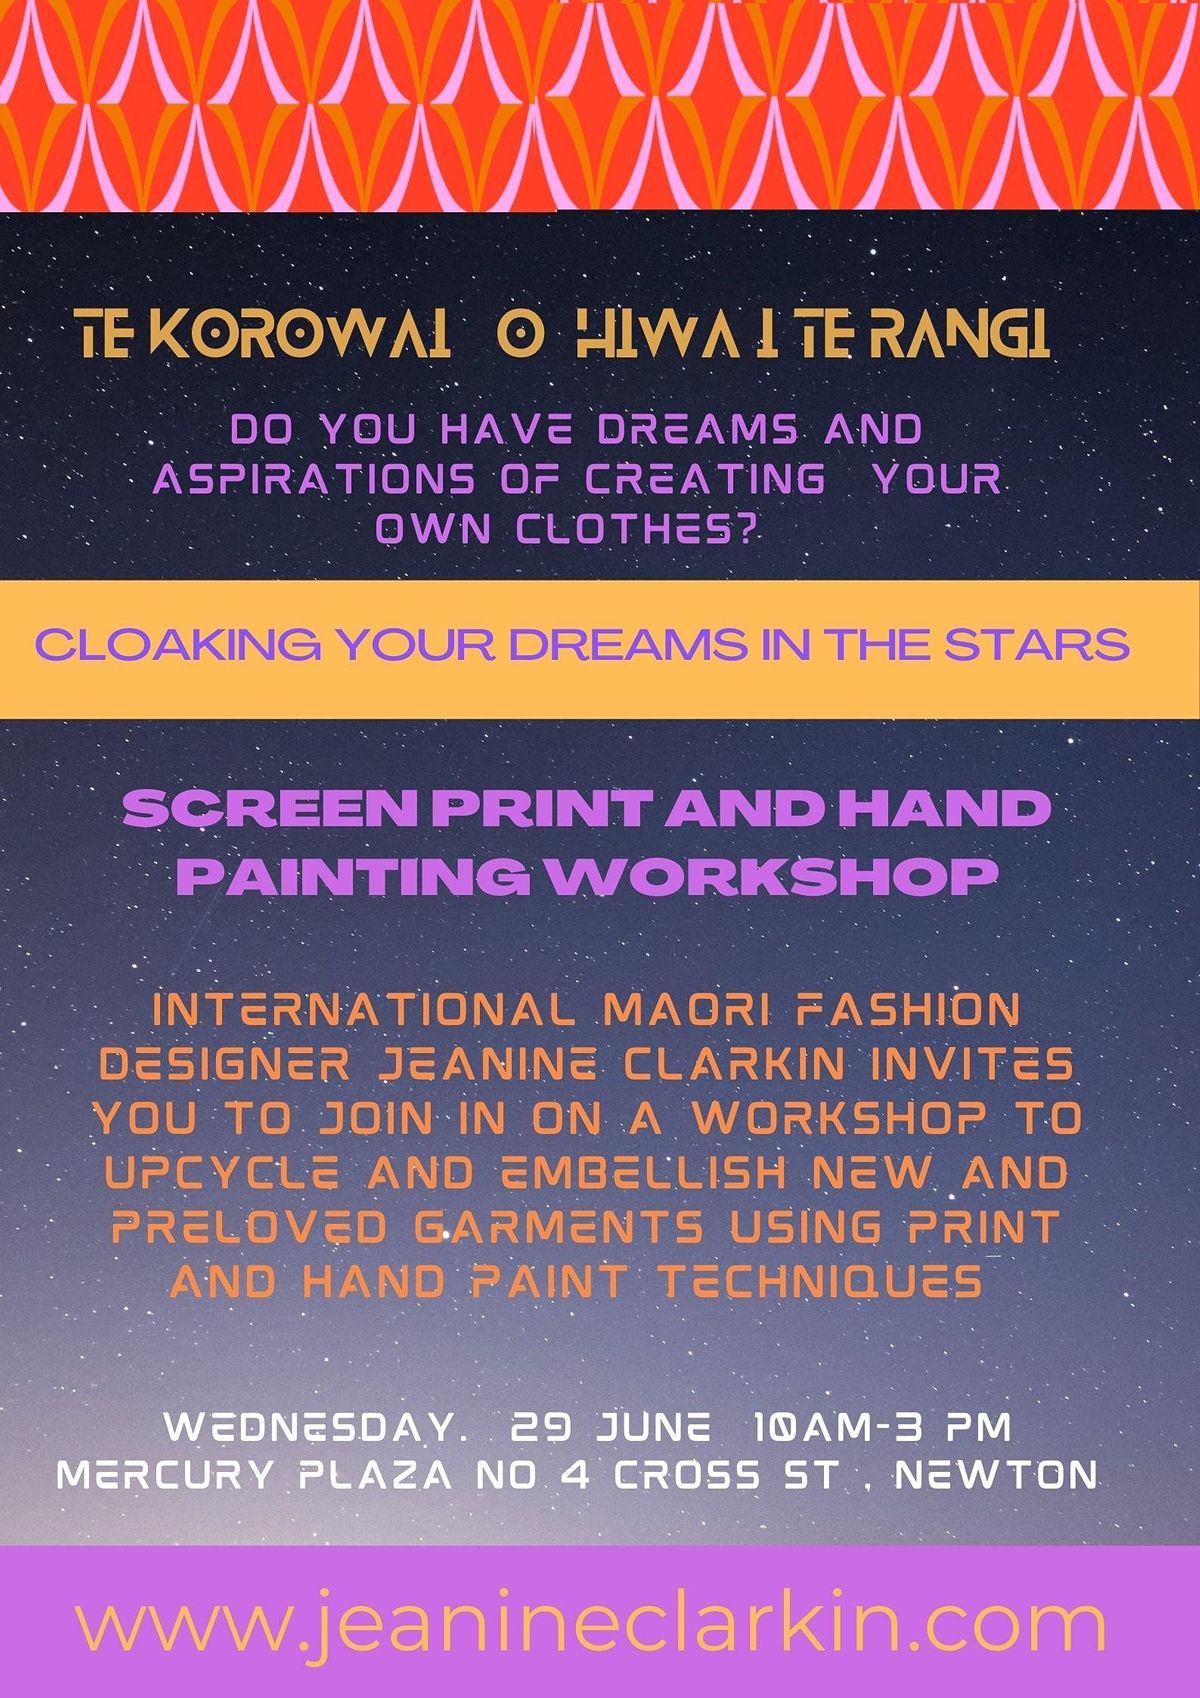 Te Korowai  O Hiwa i te rangi workshop with Jeanine Clarkin